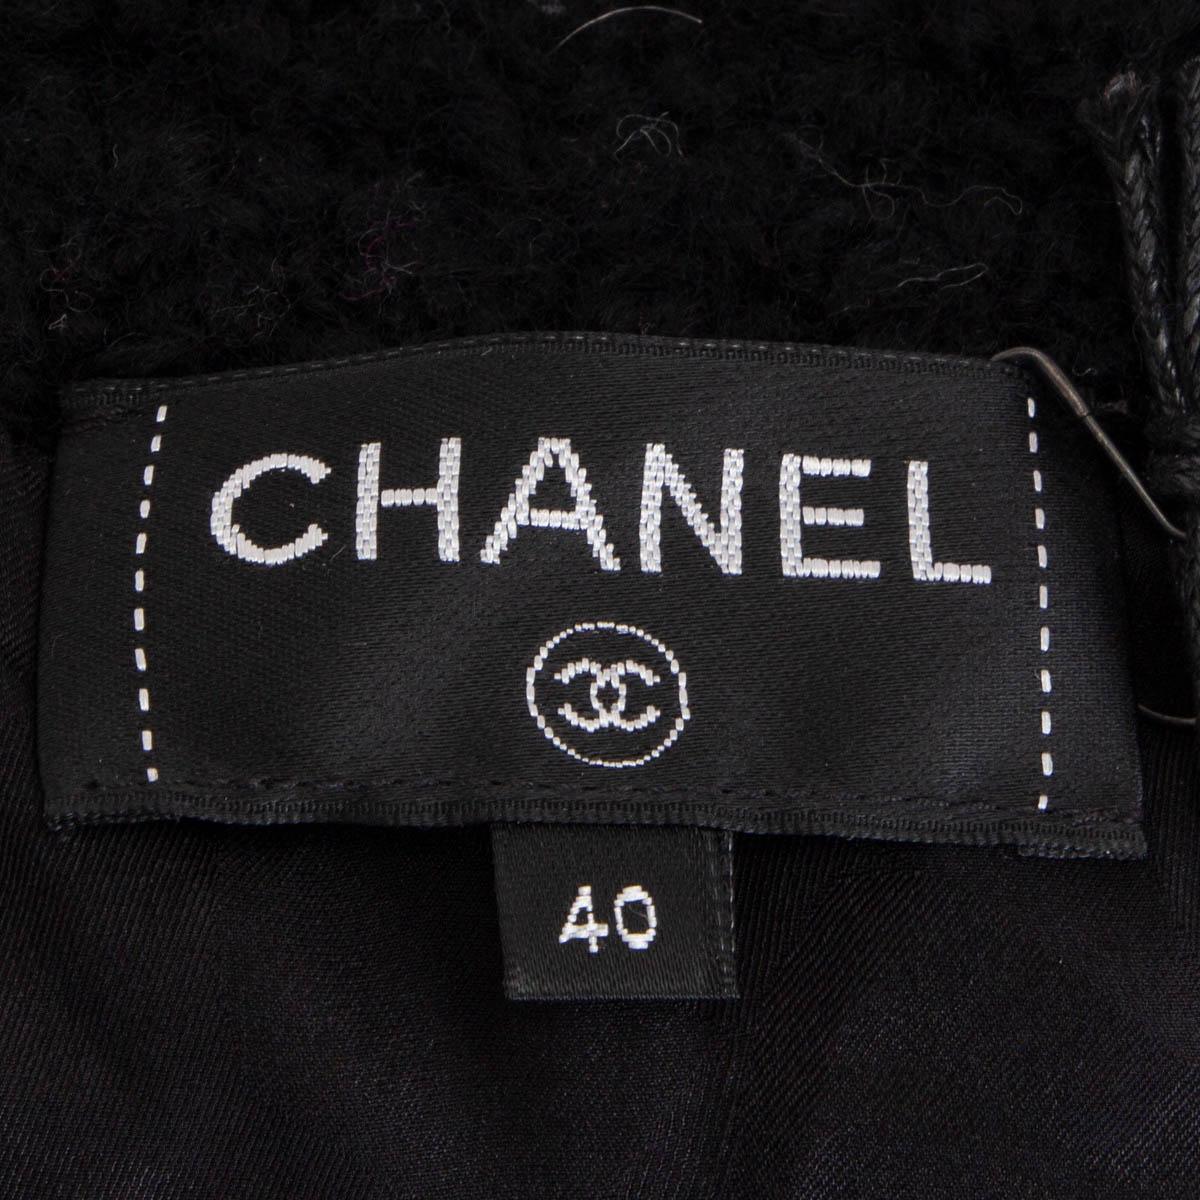 CHANEL black & white cashmere blend 2019 KNIT BOMBER Jacket 40 M 3